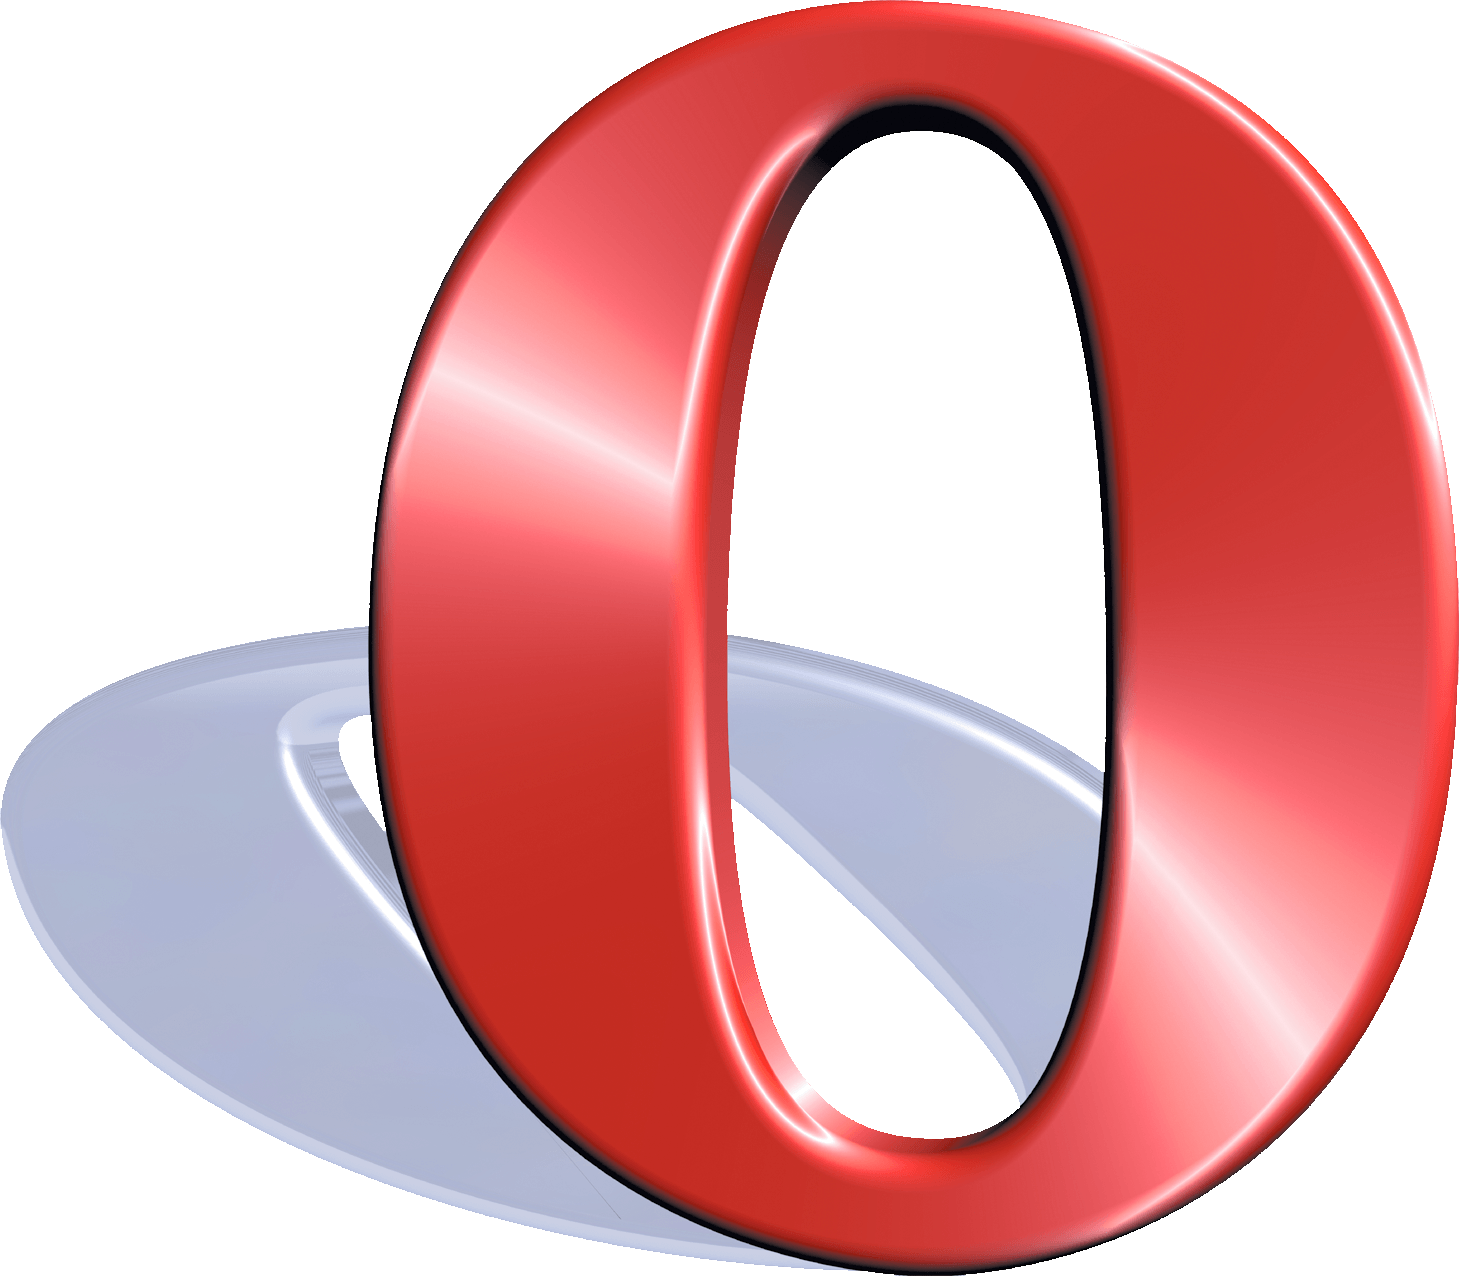 Opera Logo - Opera (web browser) | Logopedia | FANDOM powered by Wikia